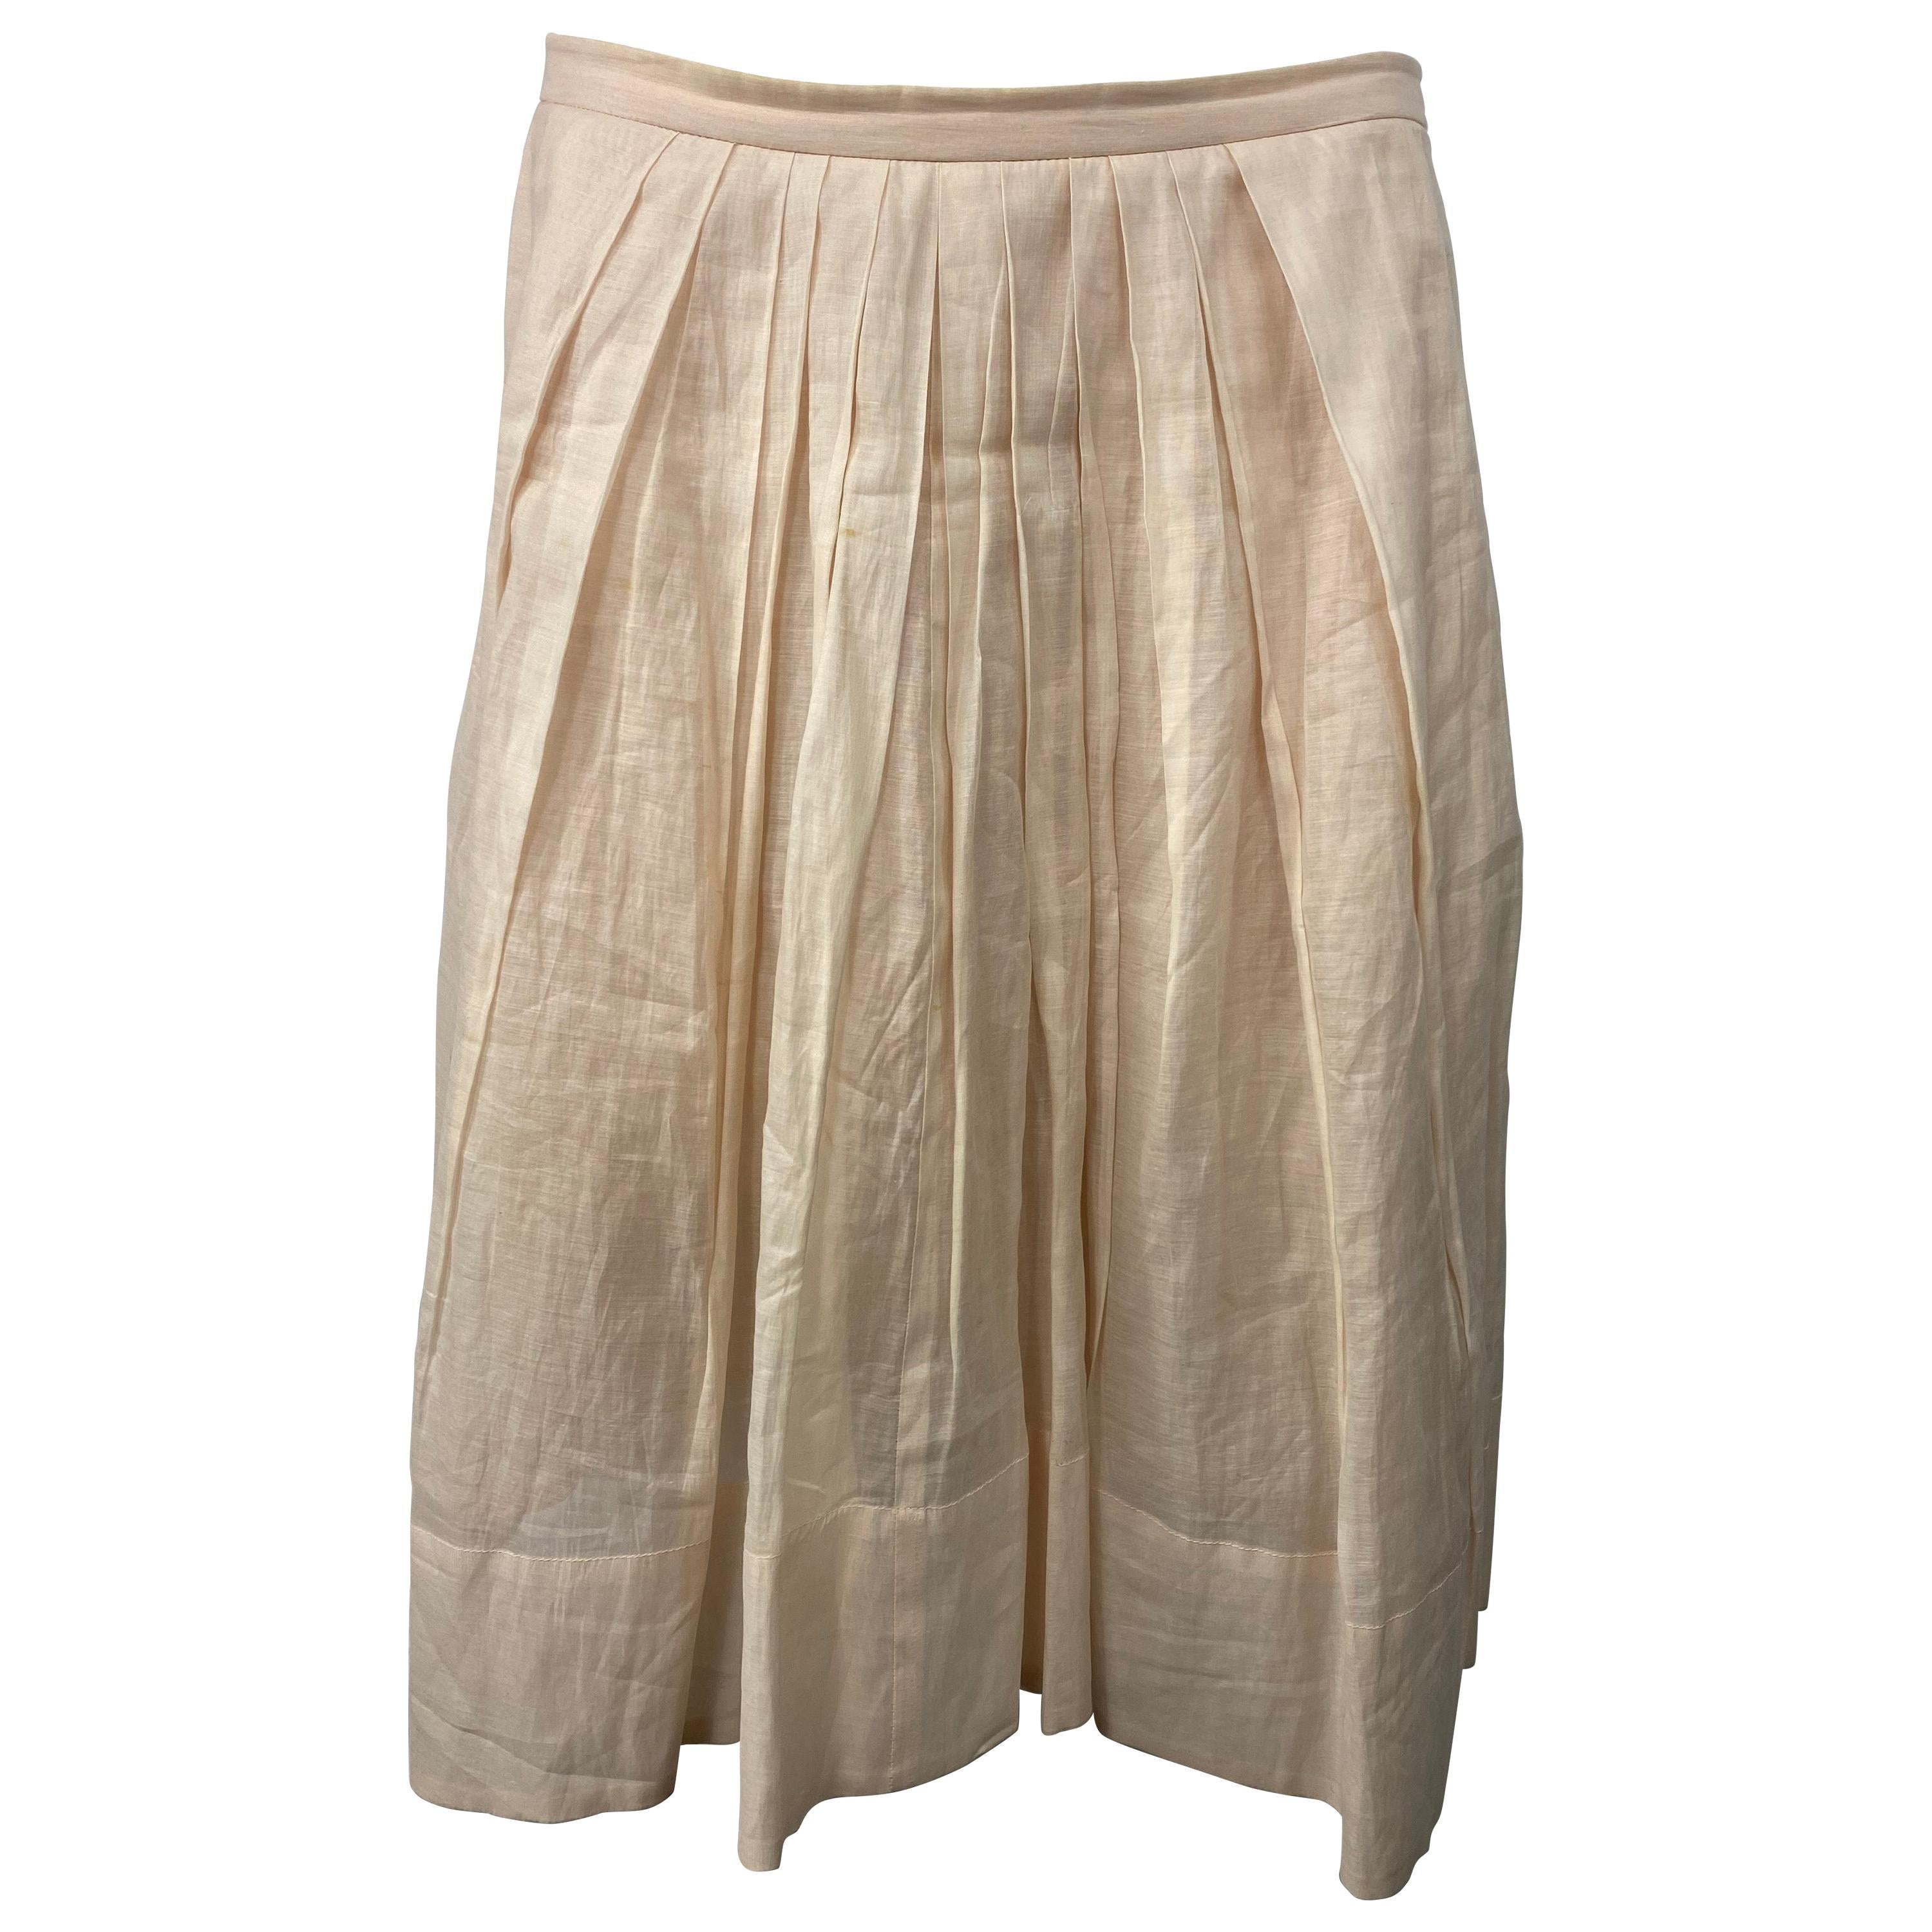 Sonia Rykiel Cream/ Ivory Cotton Ruffled Skirt, Size  38